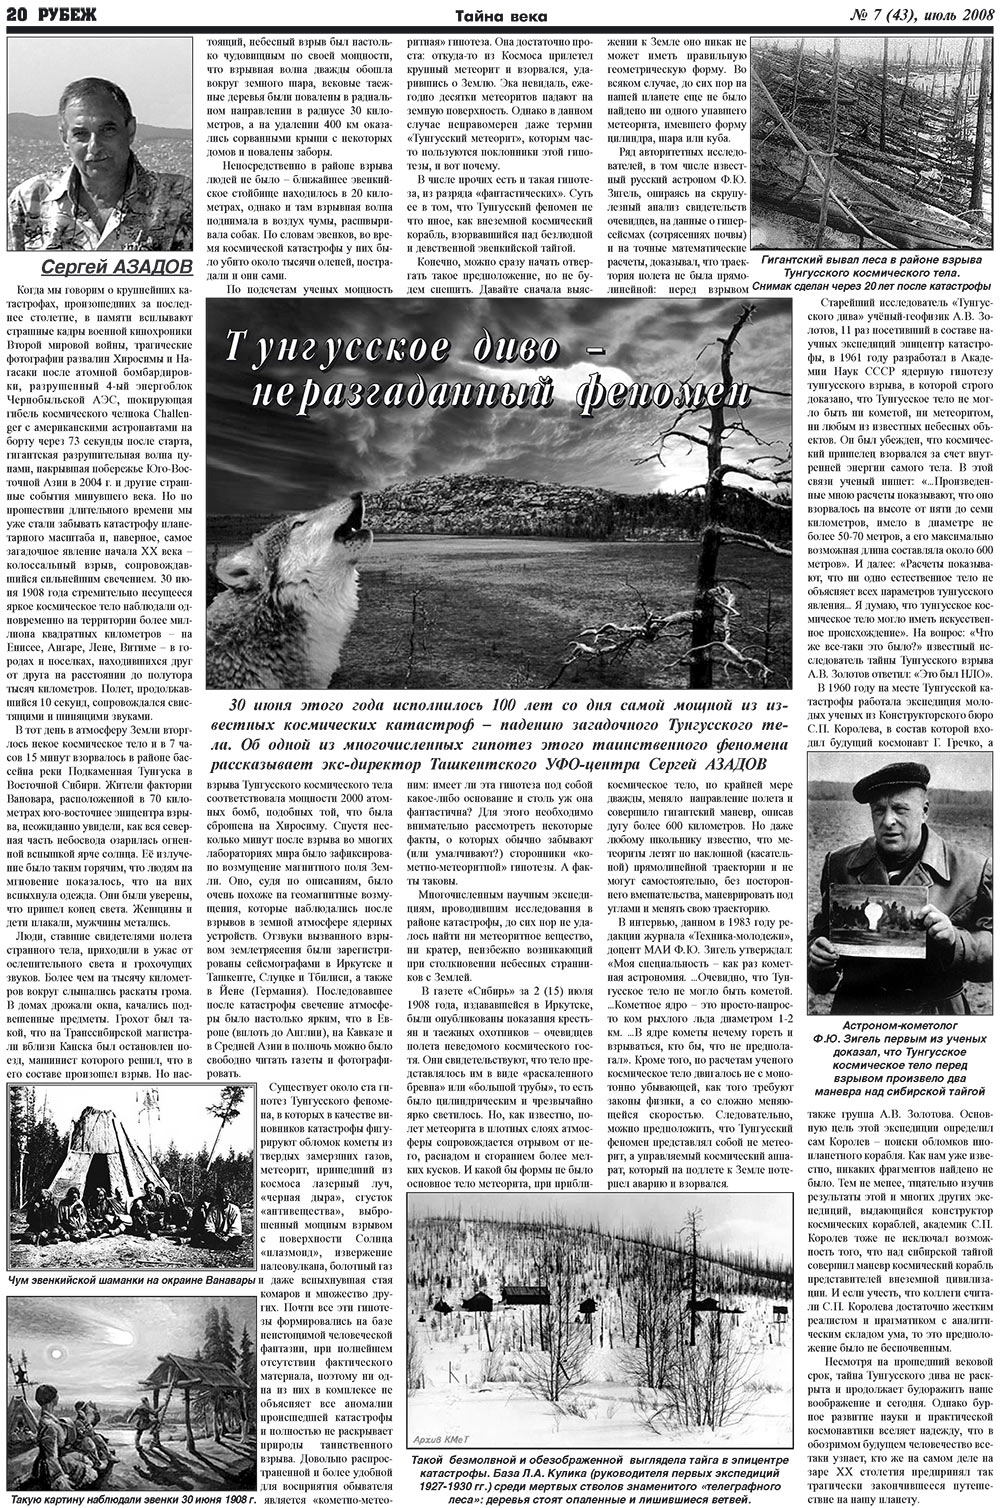 Рубеж, газета. 2008 №7 стр.20